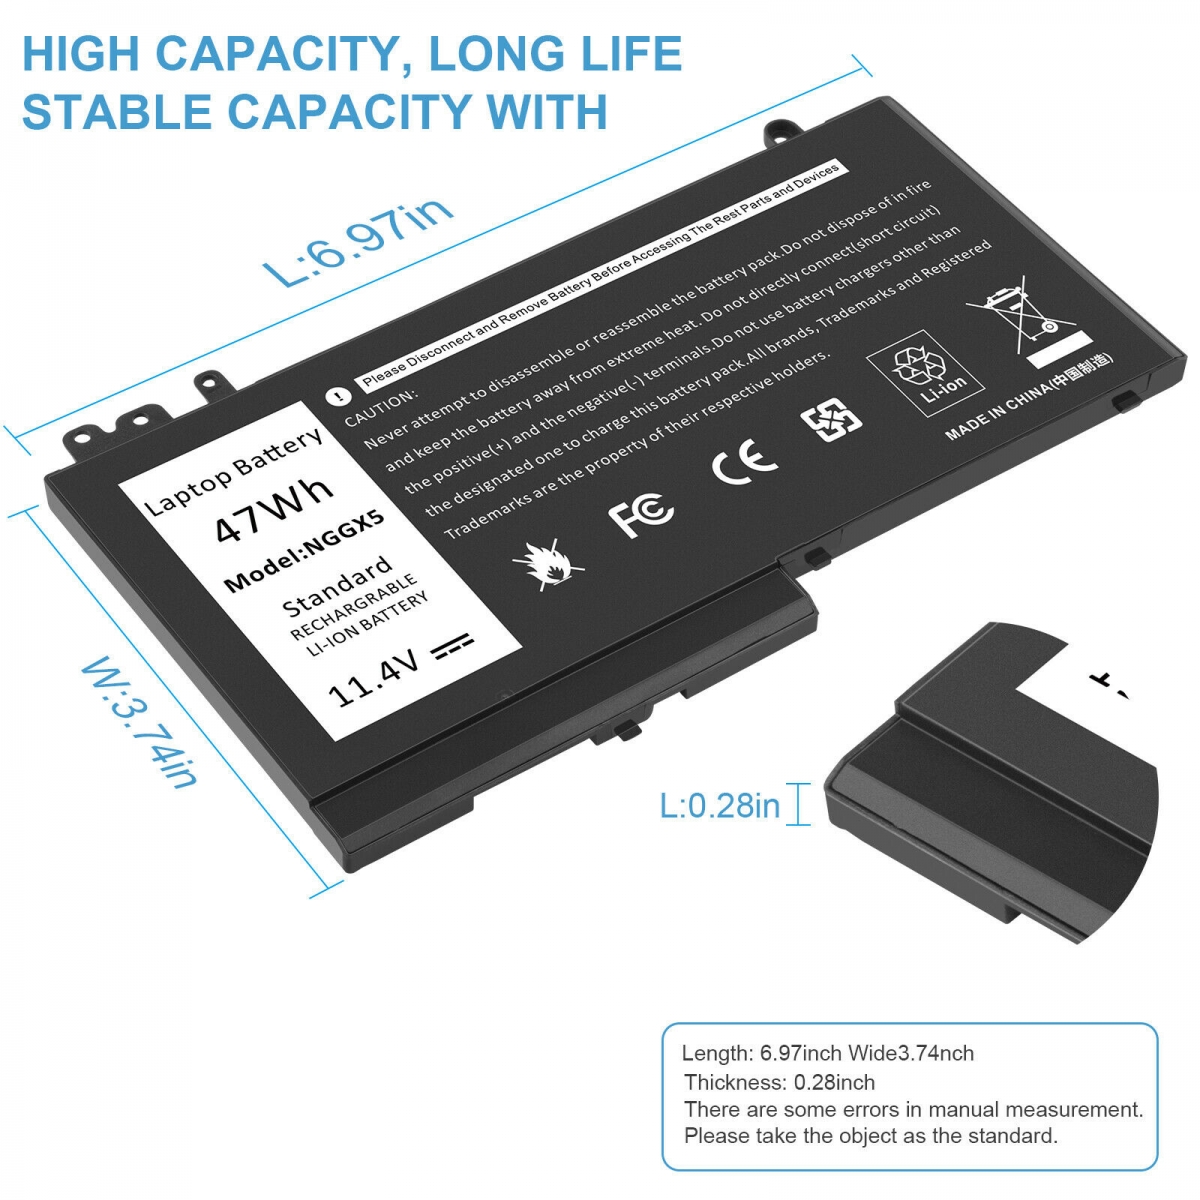 NGGX5 Battery-CPY, Аккумулятор для ноутбука, Адаптер для ноутбука, Зарядное устройство для ноутбука, Аккумулятор Dell, Аккумулятор Apple, Аккумулятор HP